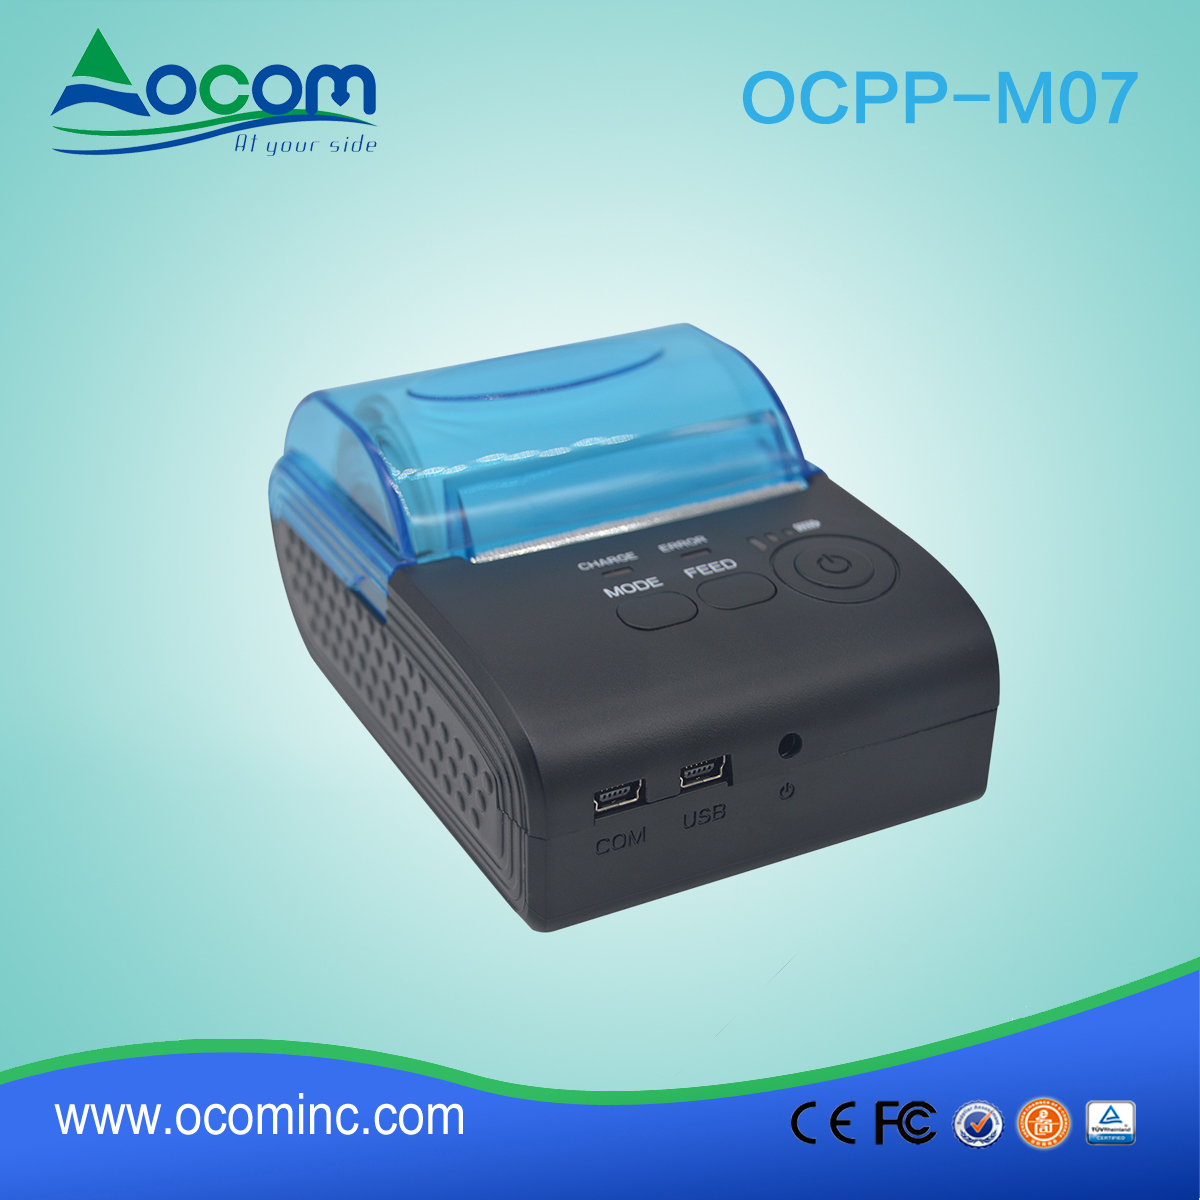 OCPP-M07 fabriek mini draagbare printer voor mobiele android ios